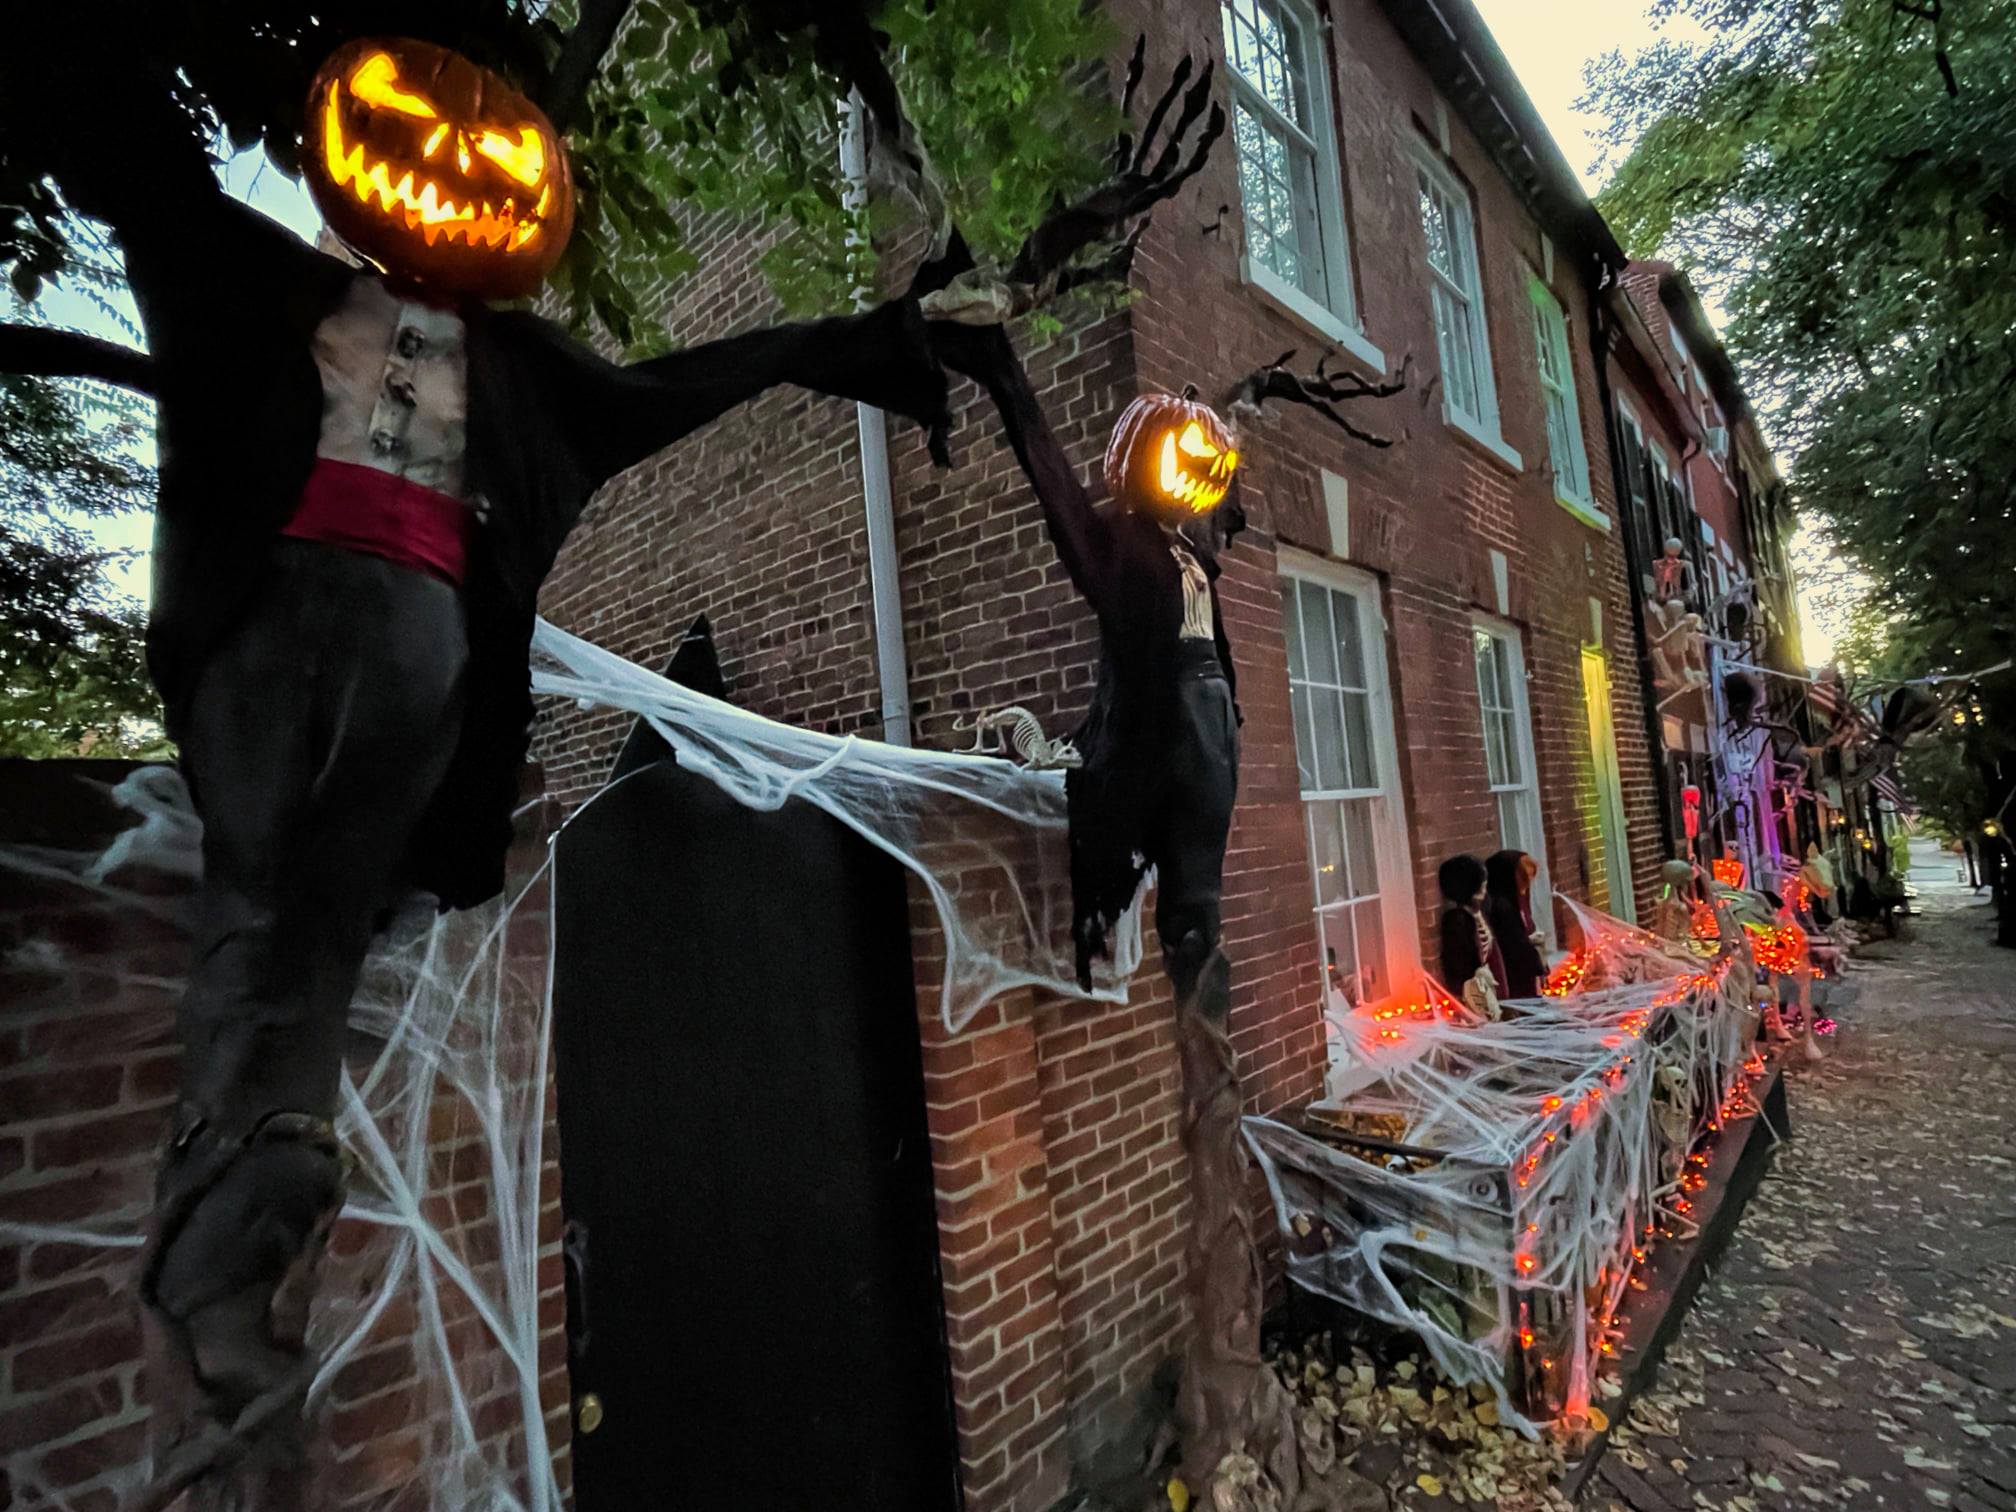 Lee Street Halloween Tradition Returns The ZebraGood News in Alexandria